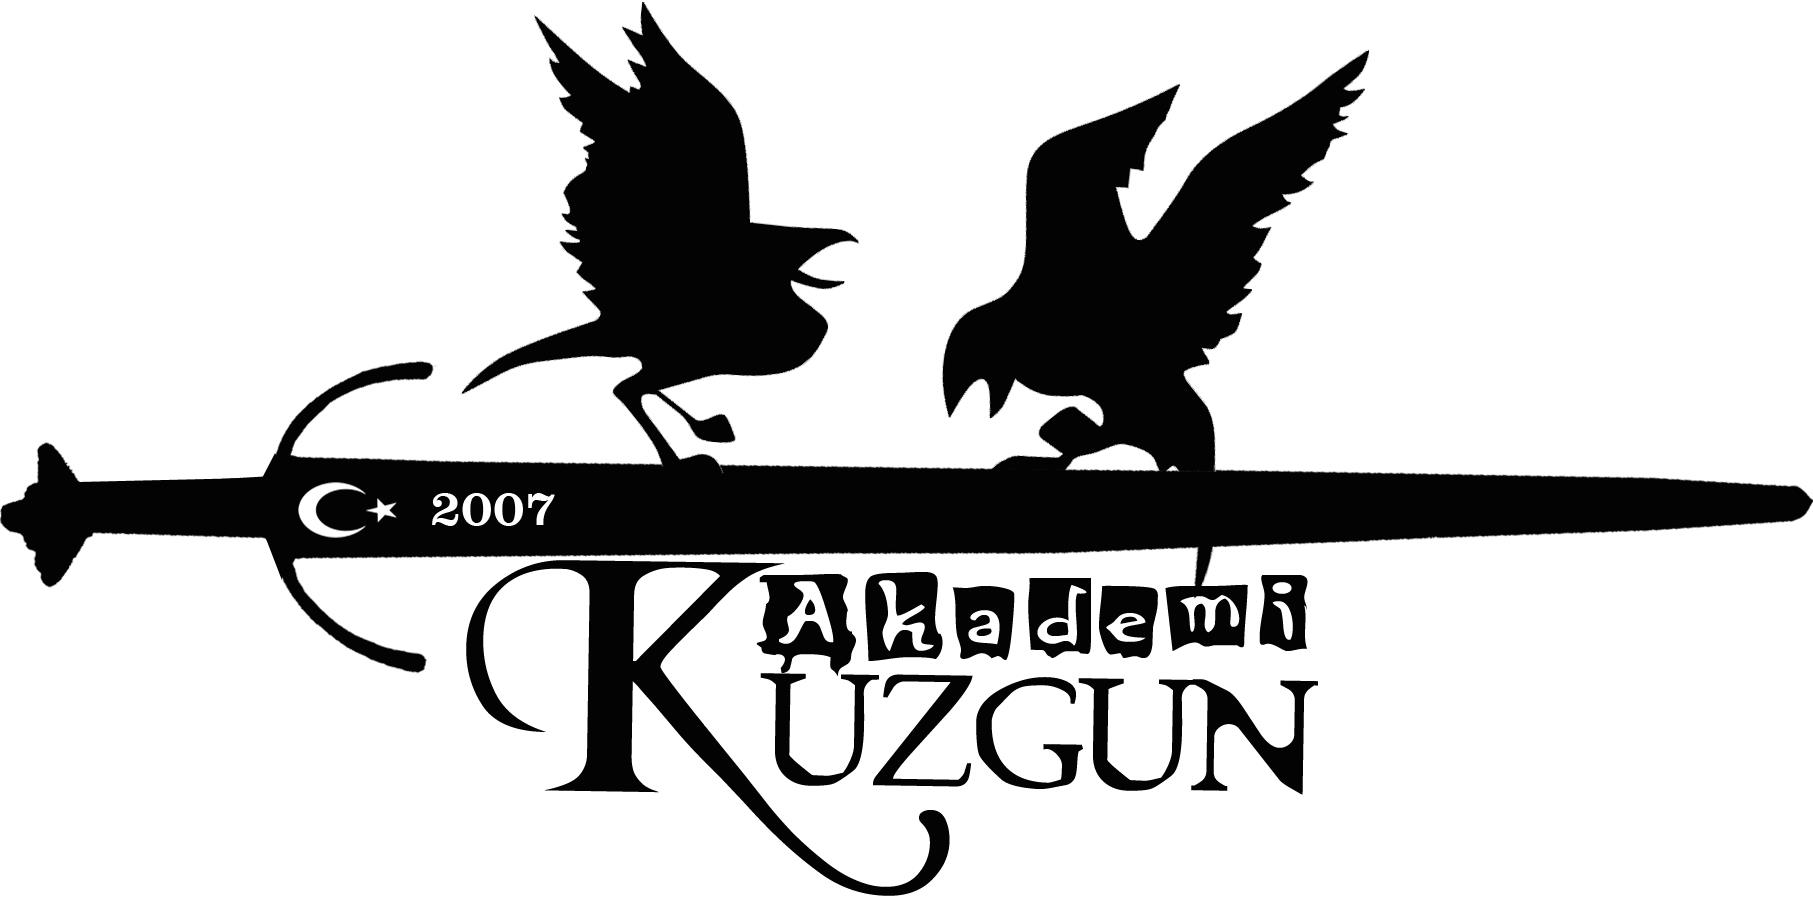 kuzgun-akademi-logo